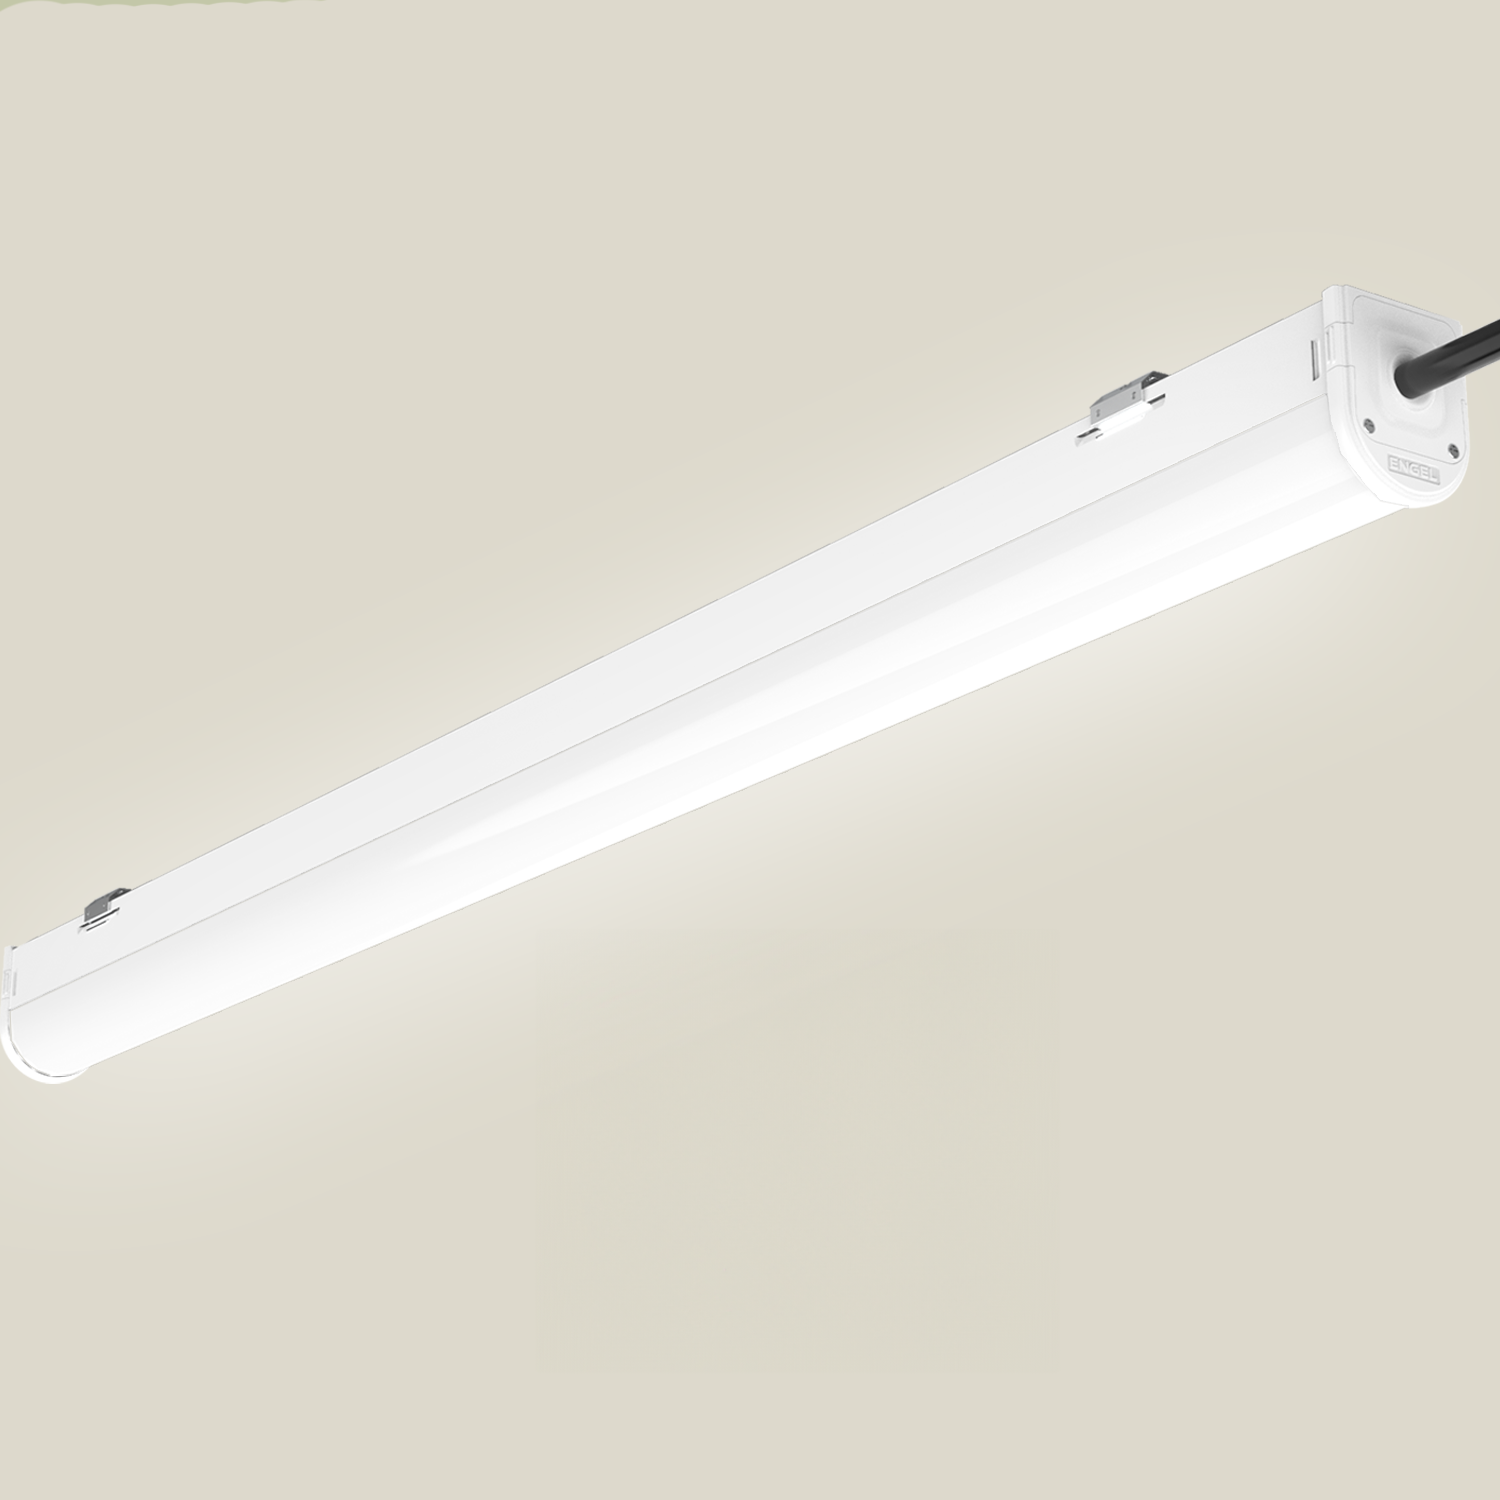 Engel LED Lichtleiste  60-140cm IP20 Stahlblech Reihenschaltung Schubladenanschluss